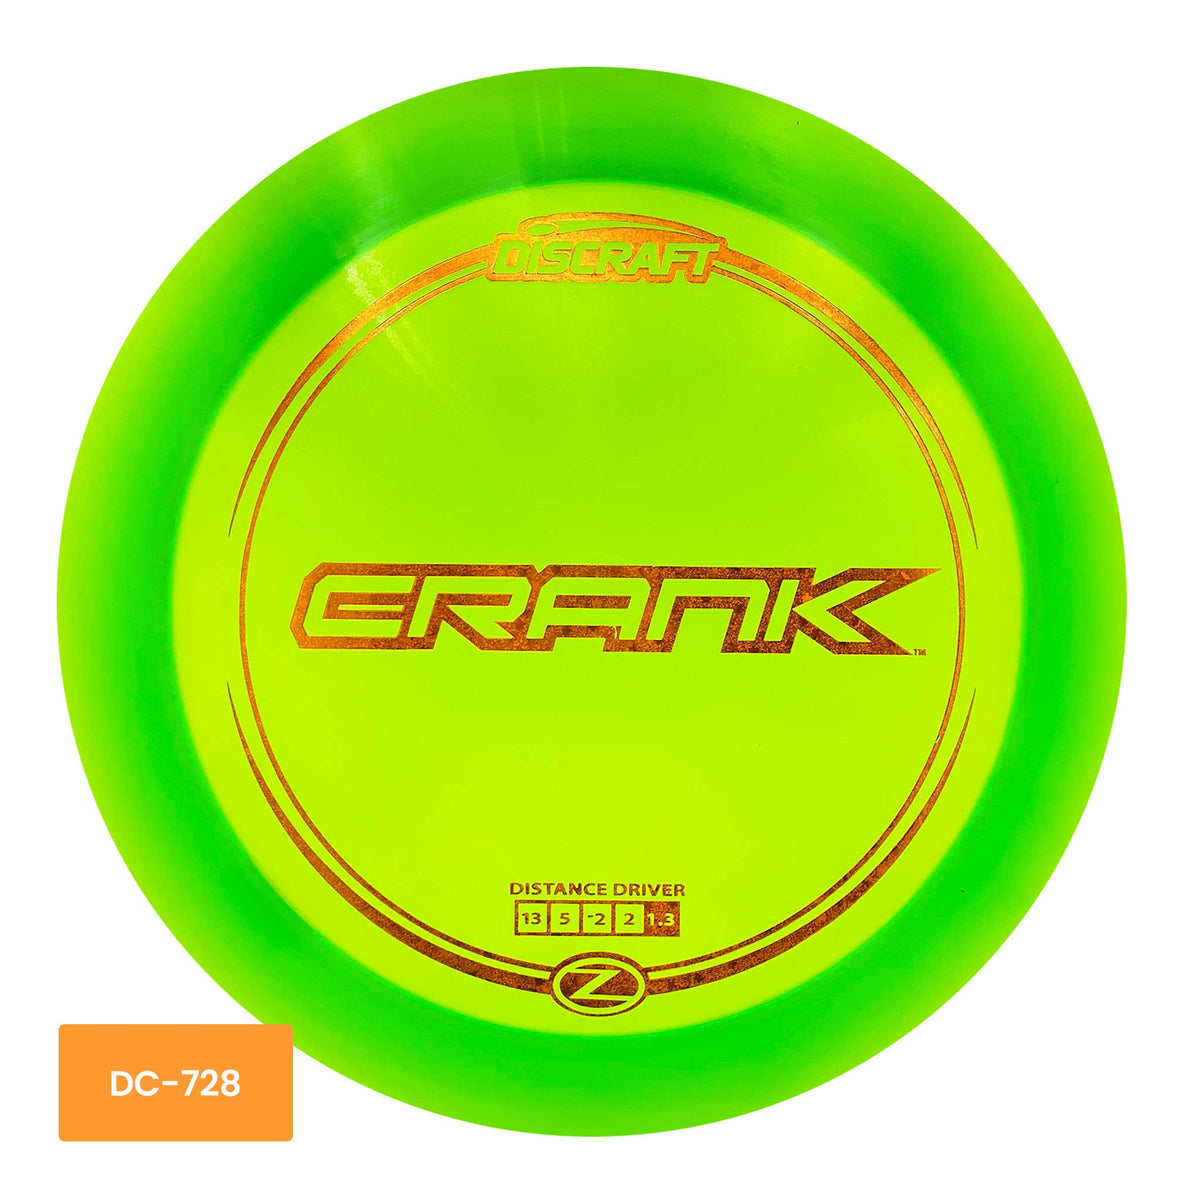 Discraft Z Line Crank distance driver - Green/Orange